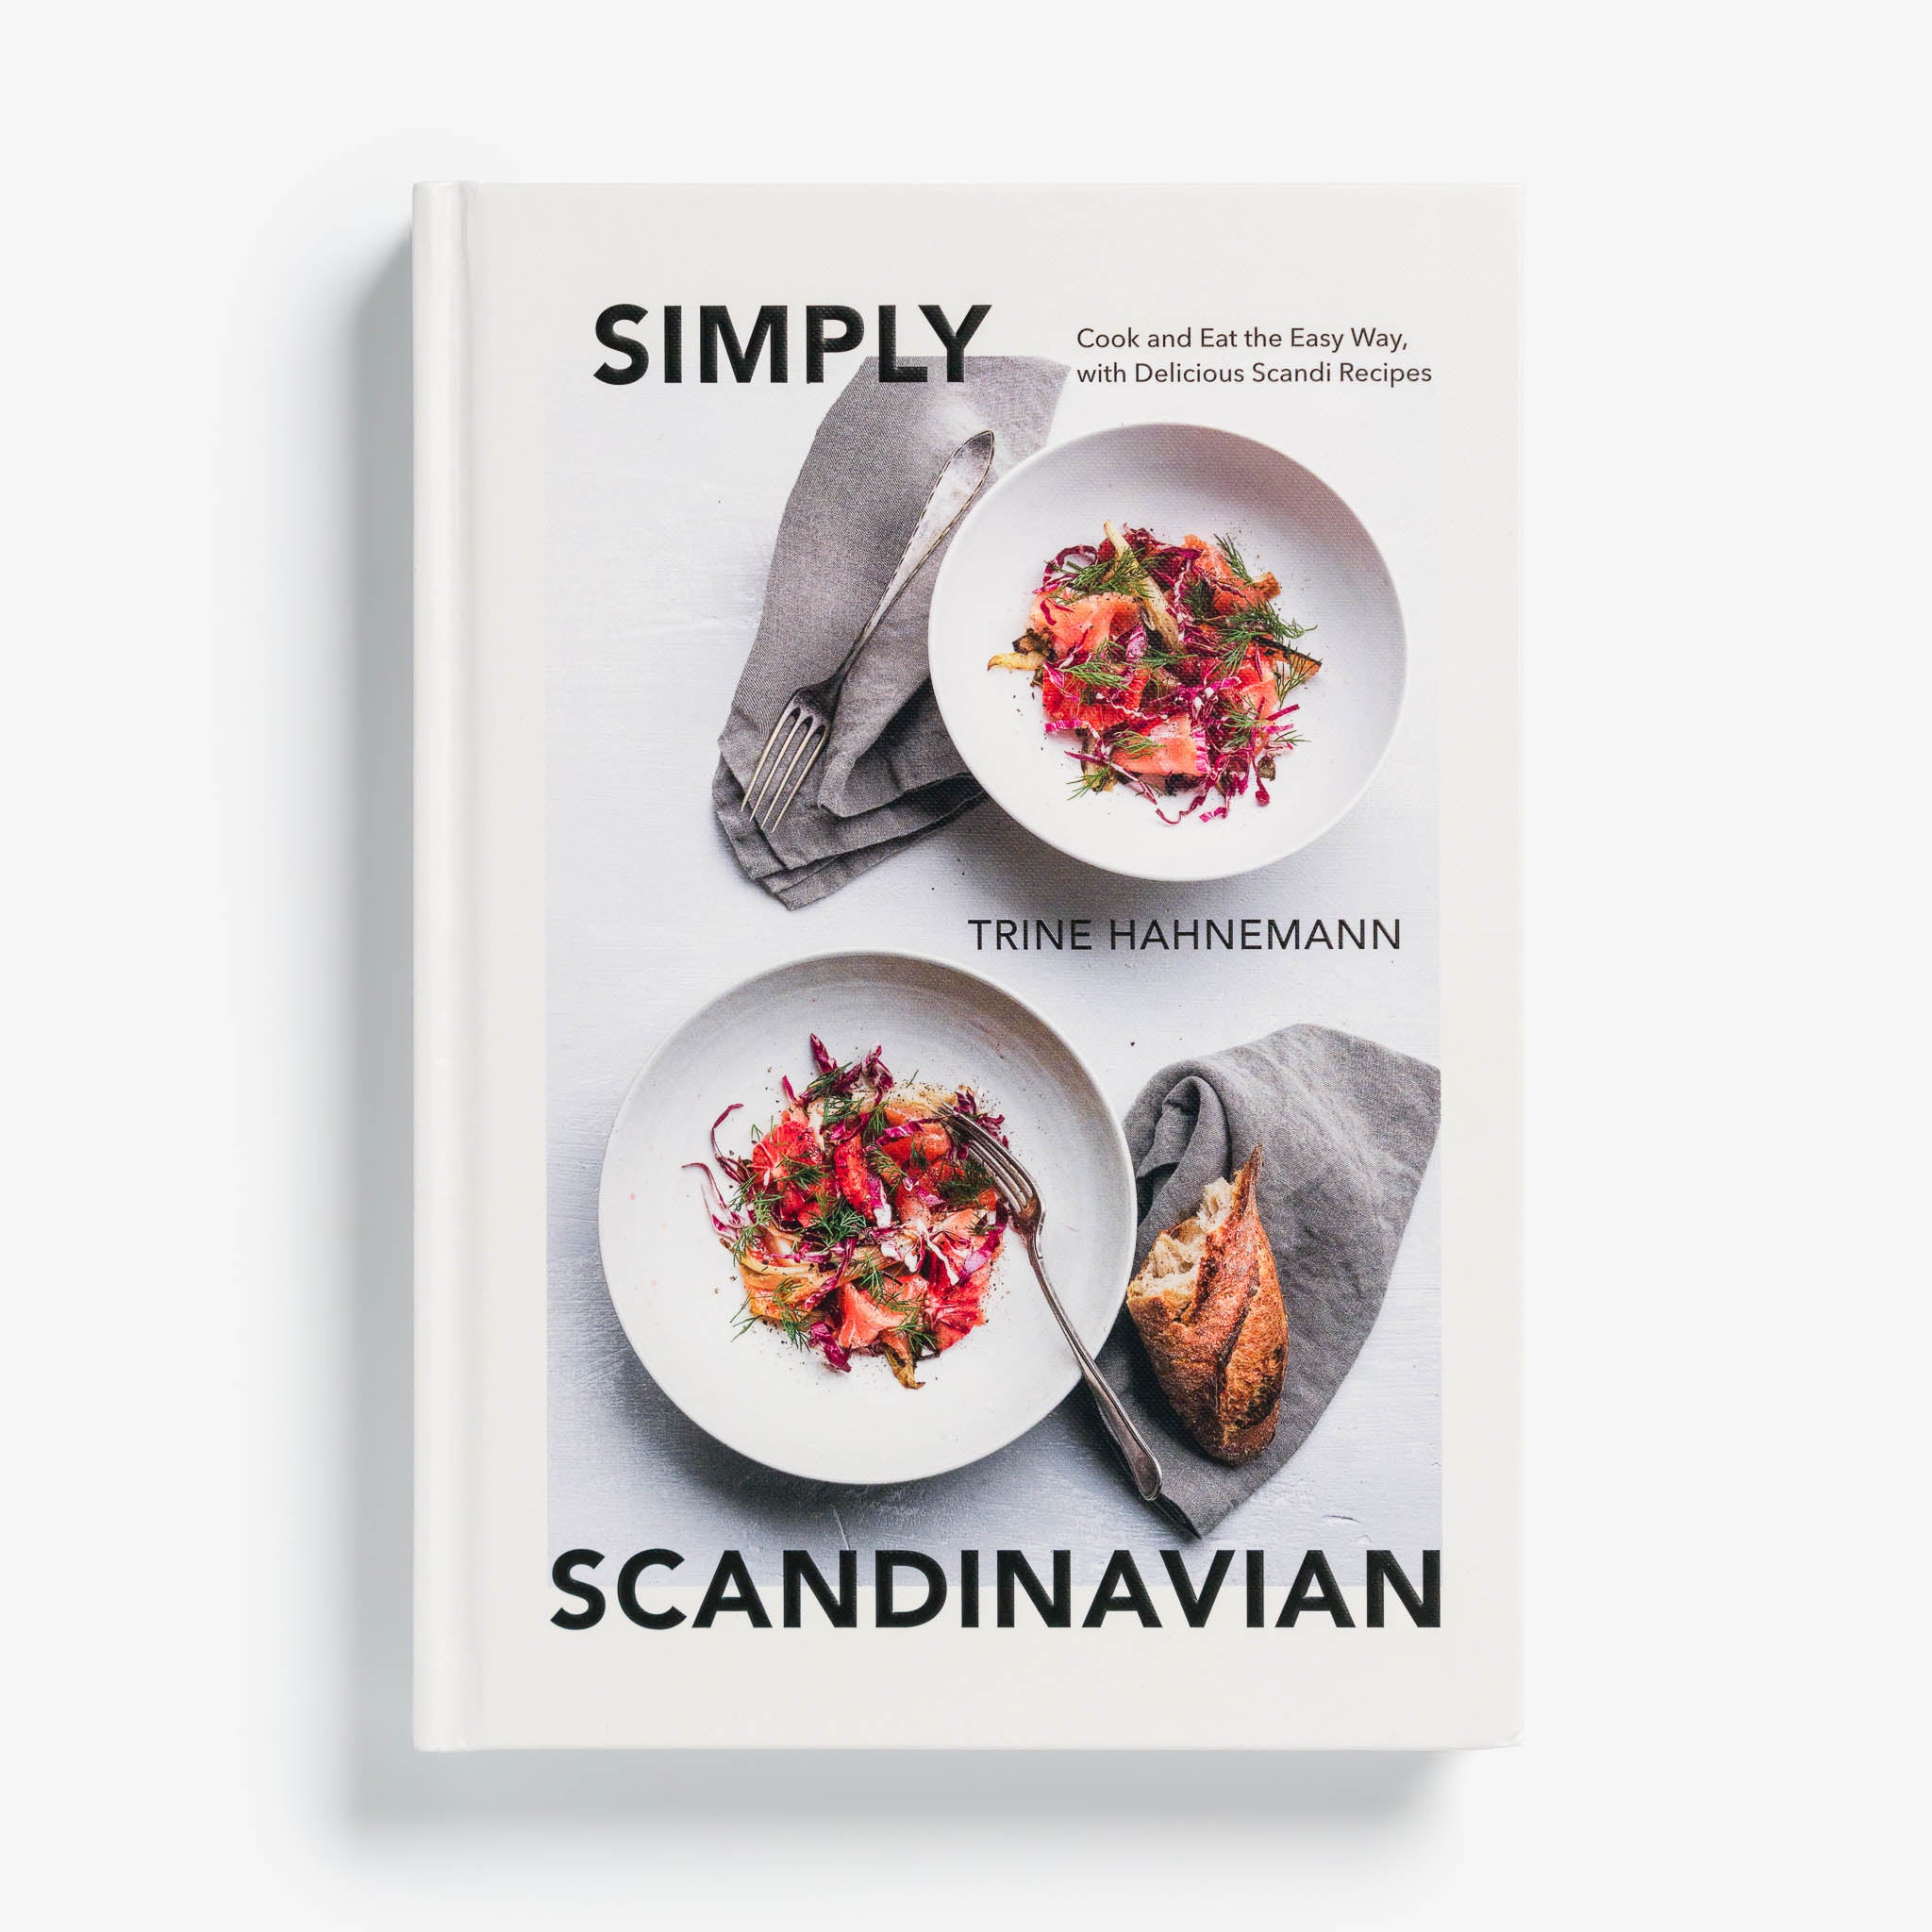 Simply Scandinavian by Trine Hahnemann